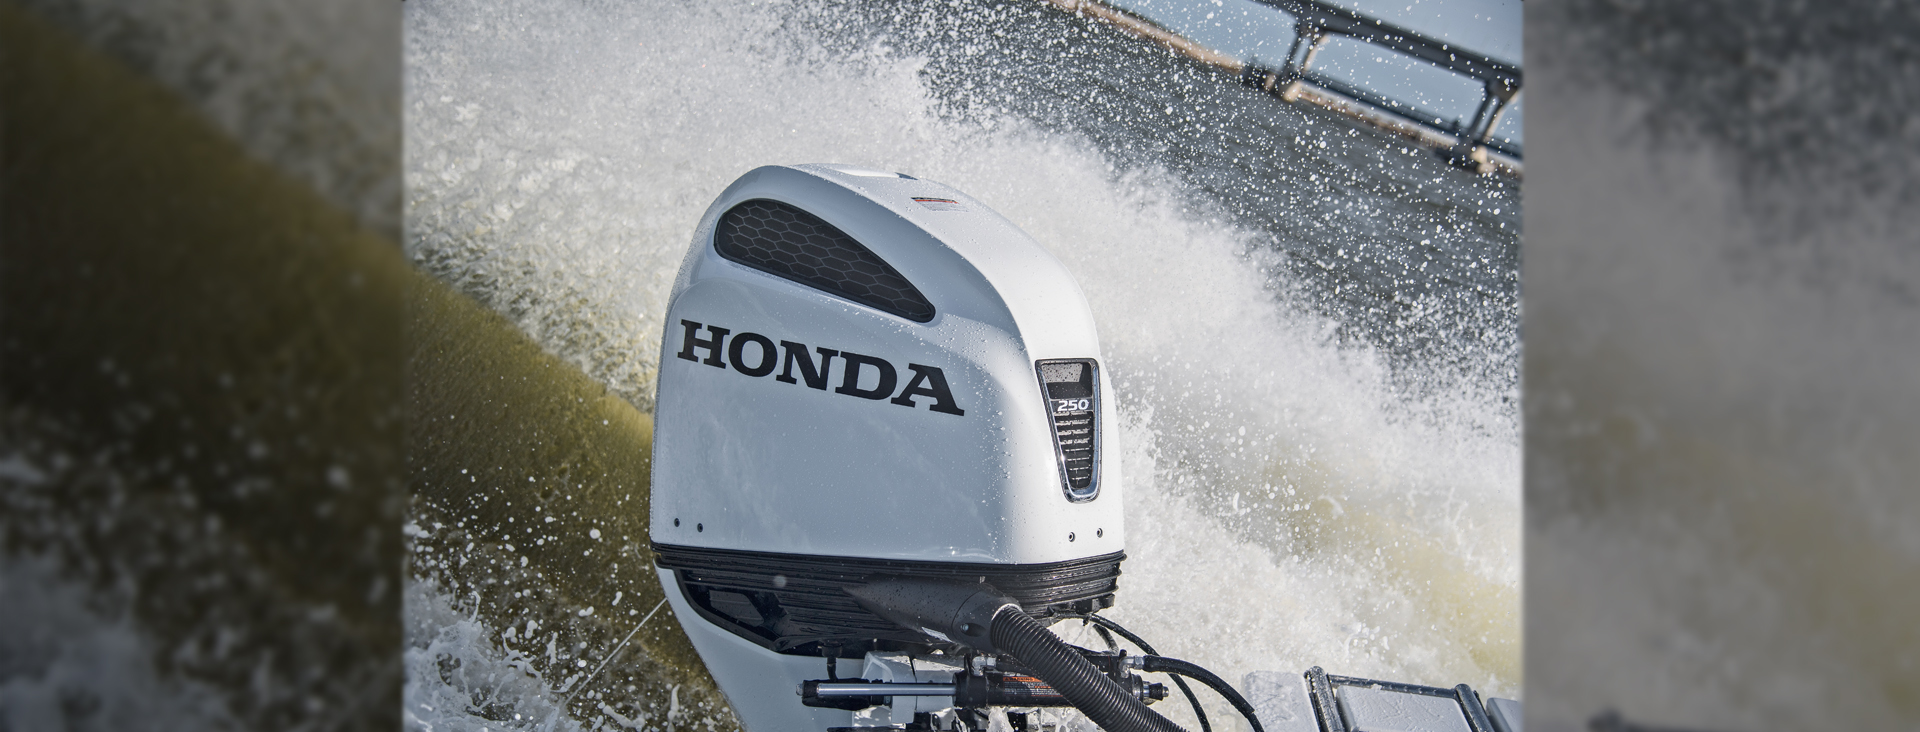 Honda outboard engine